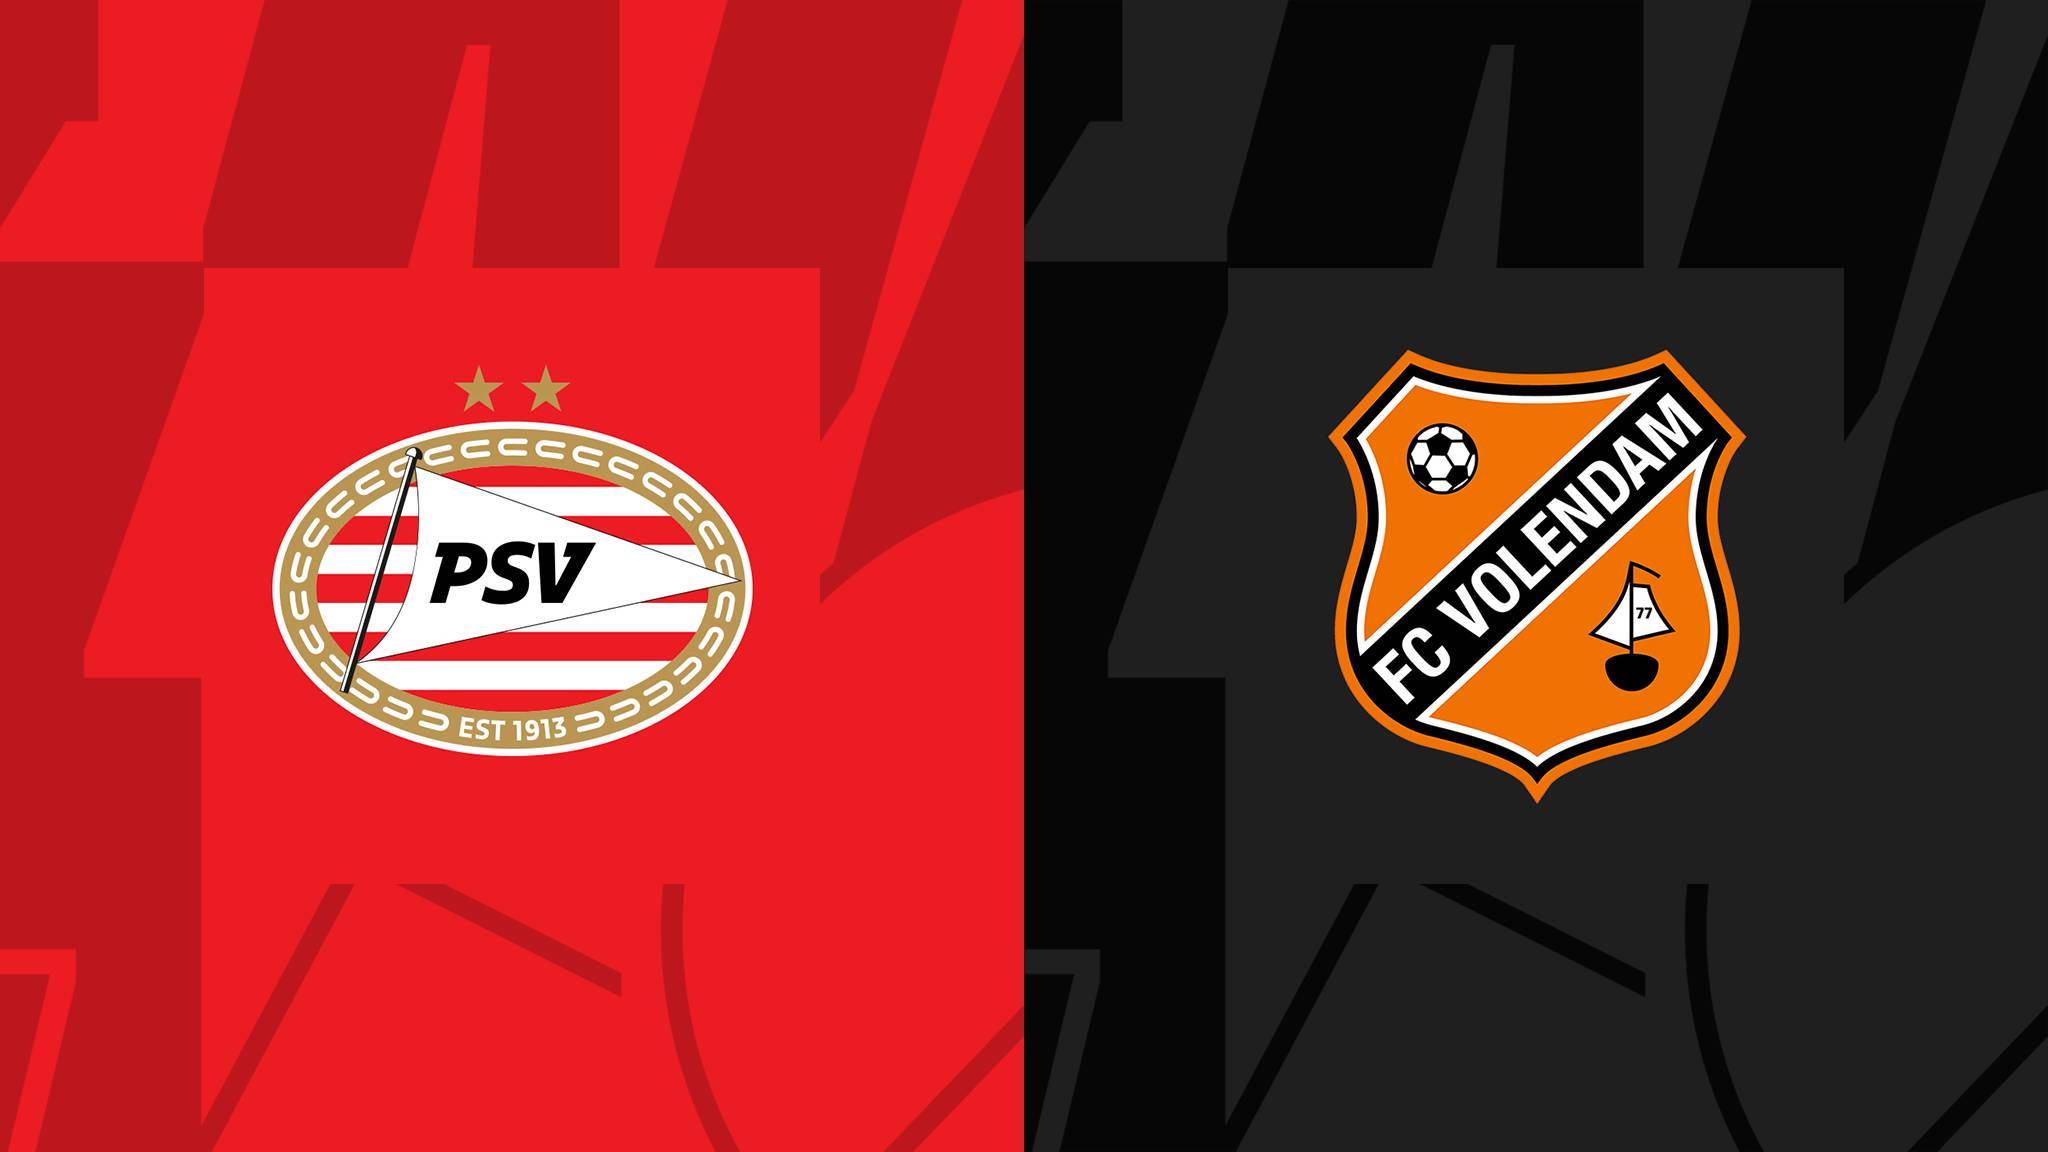 مشاهدة مباراة بي إس في آيندهوفن و فوليندام بث مباشر 31/08/2022 PSV vs Volendam